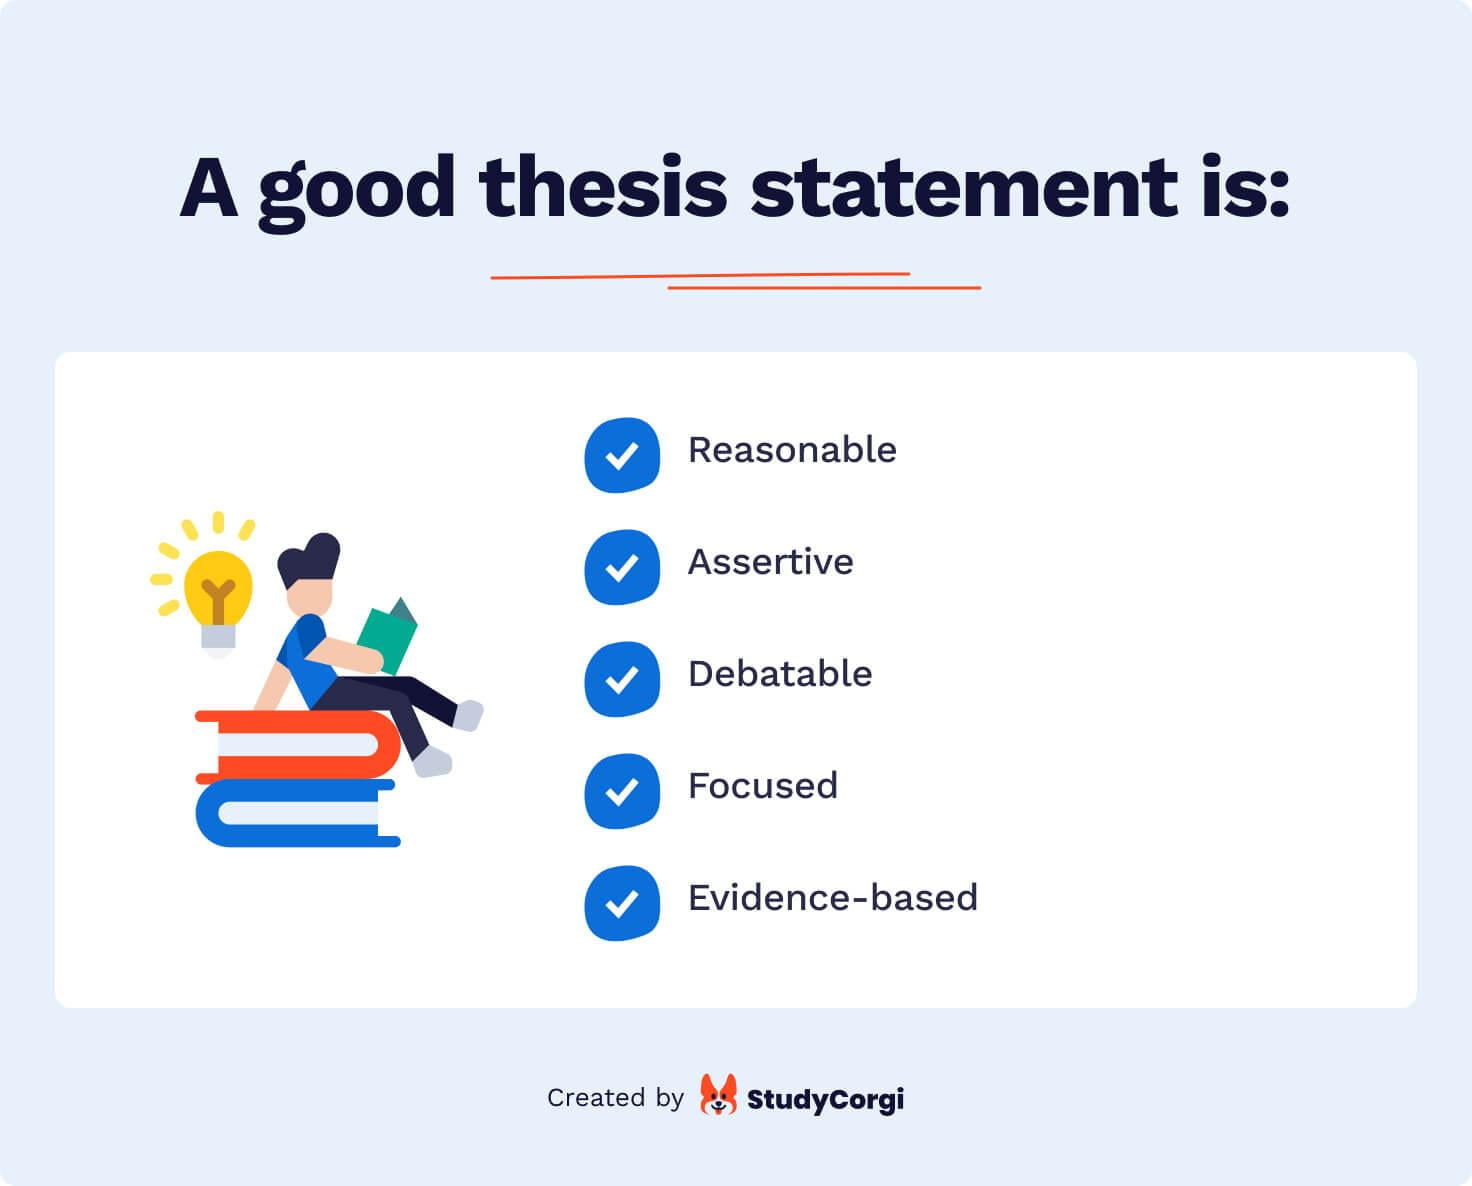 thesis generator for argumentative essay